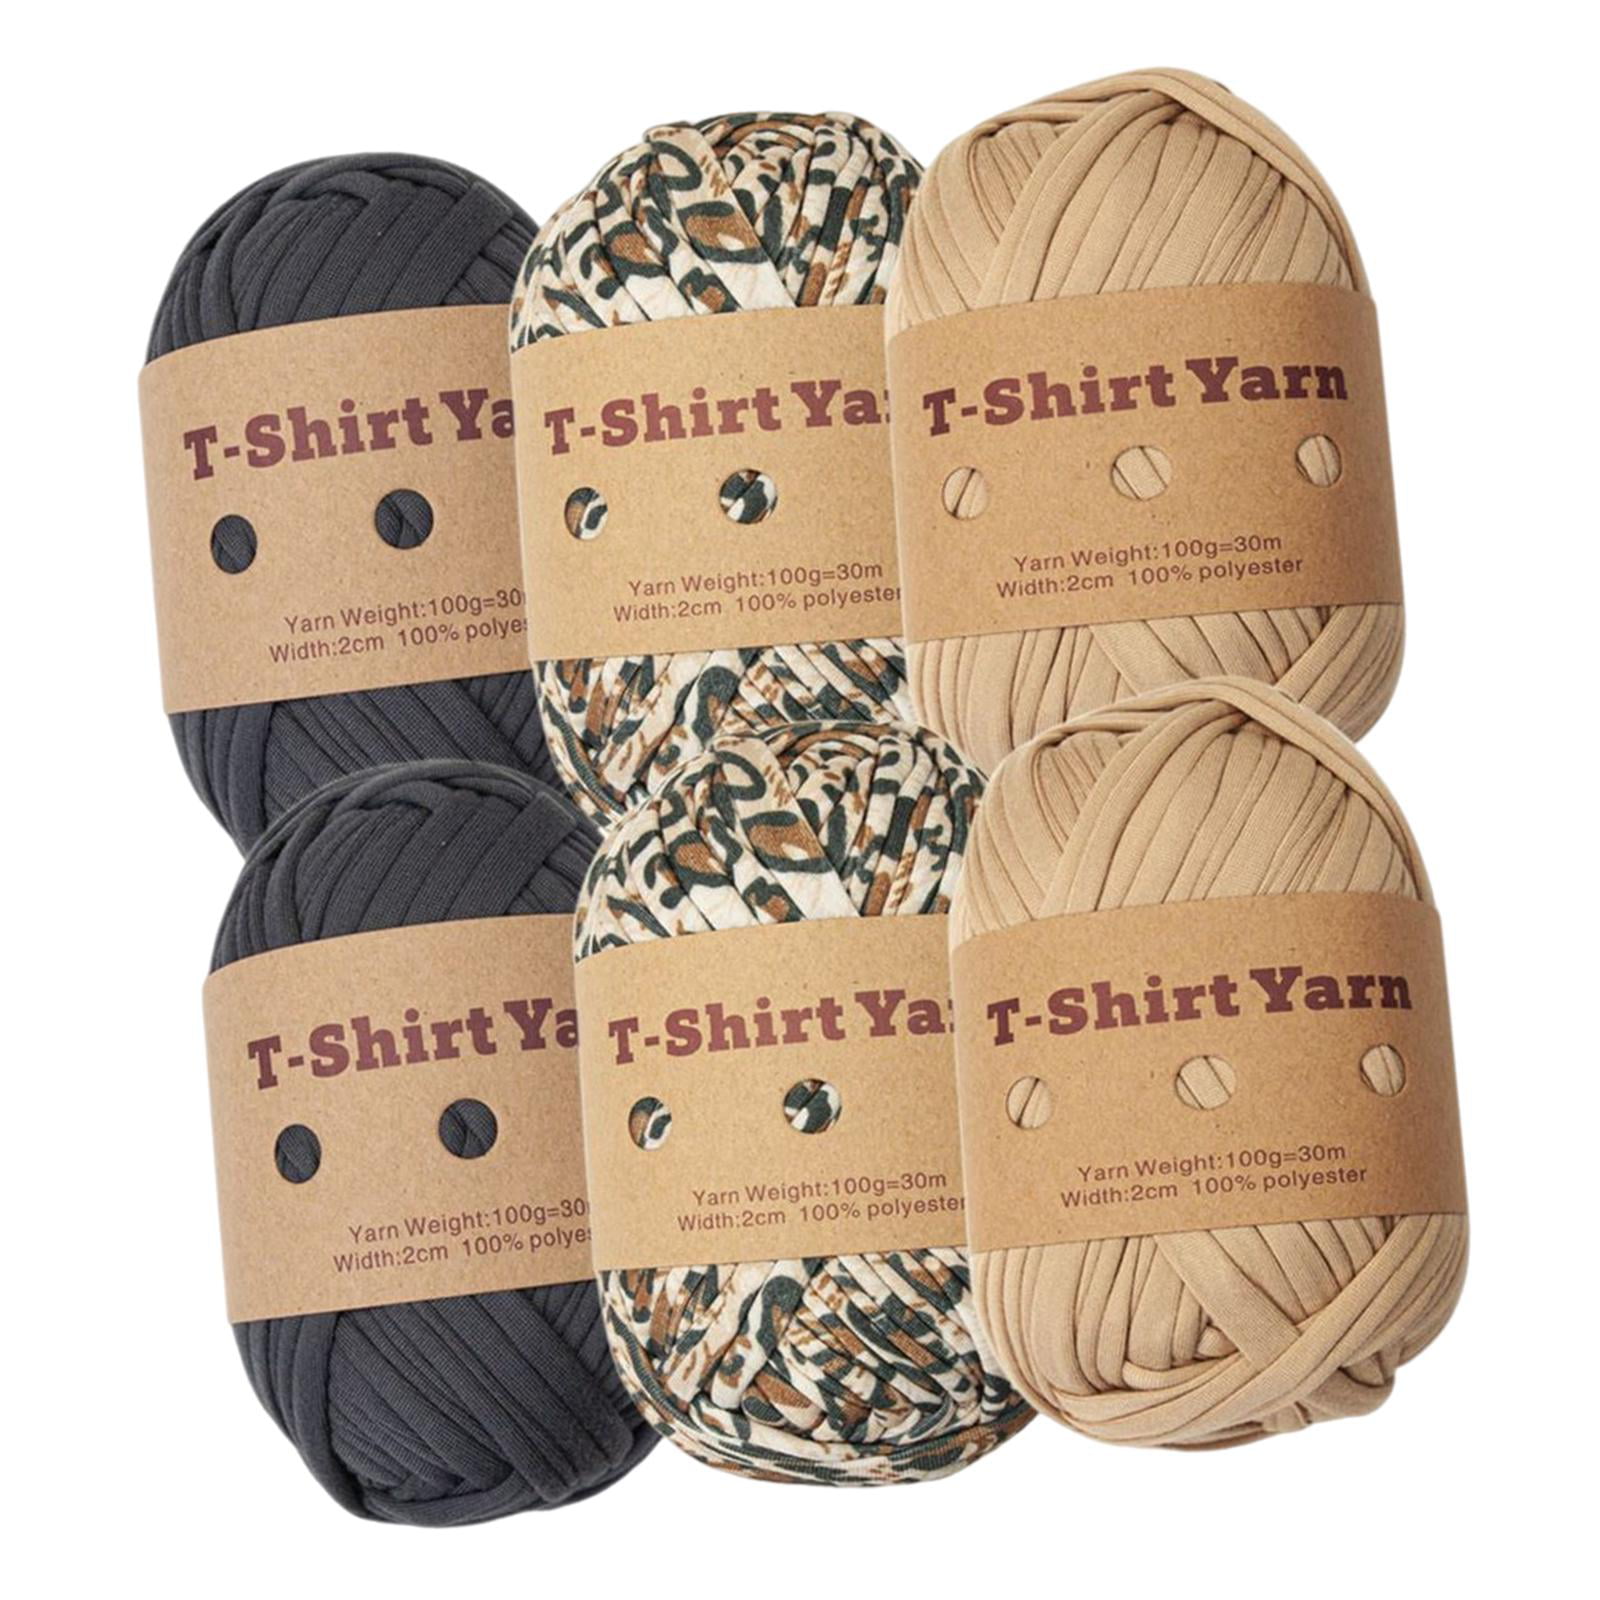  JeogYong T-Shirt Yarn, 400g/131 Yards Super Soft Fabric Crochet  Cloth T Shirt Yarn, Thick Hand Knitting Yarn for Crocheting  Bags/Baskets/Rugs, Home Decor, DIY Crafts (Orange)